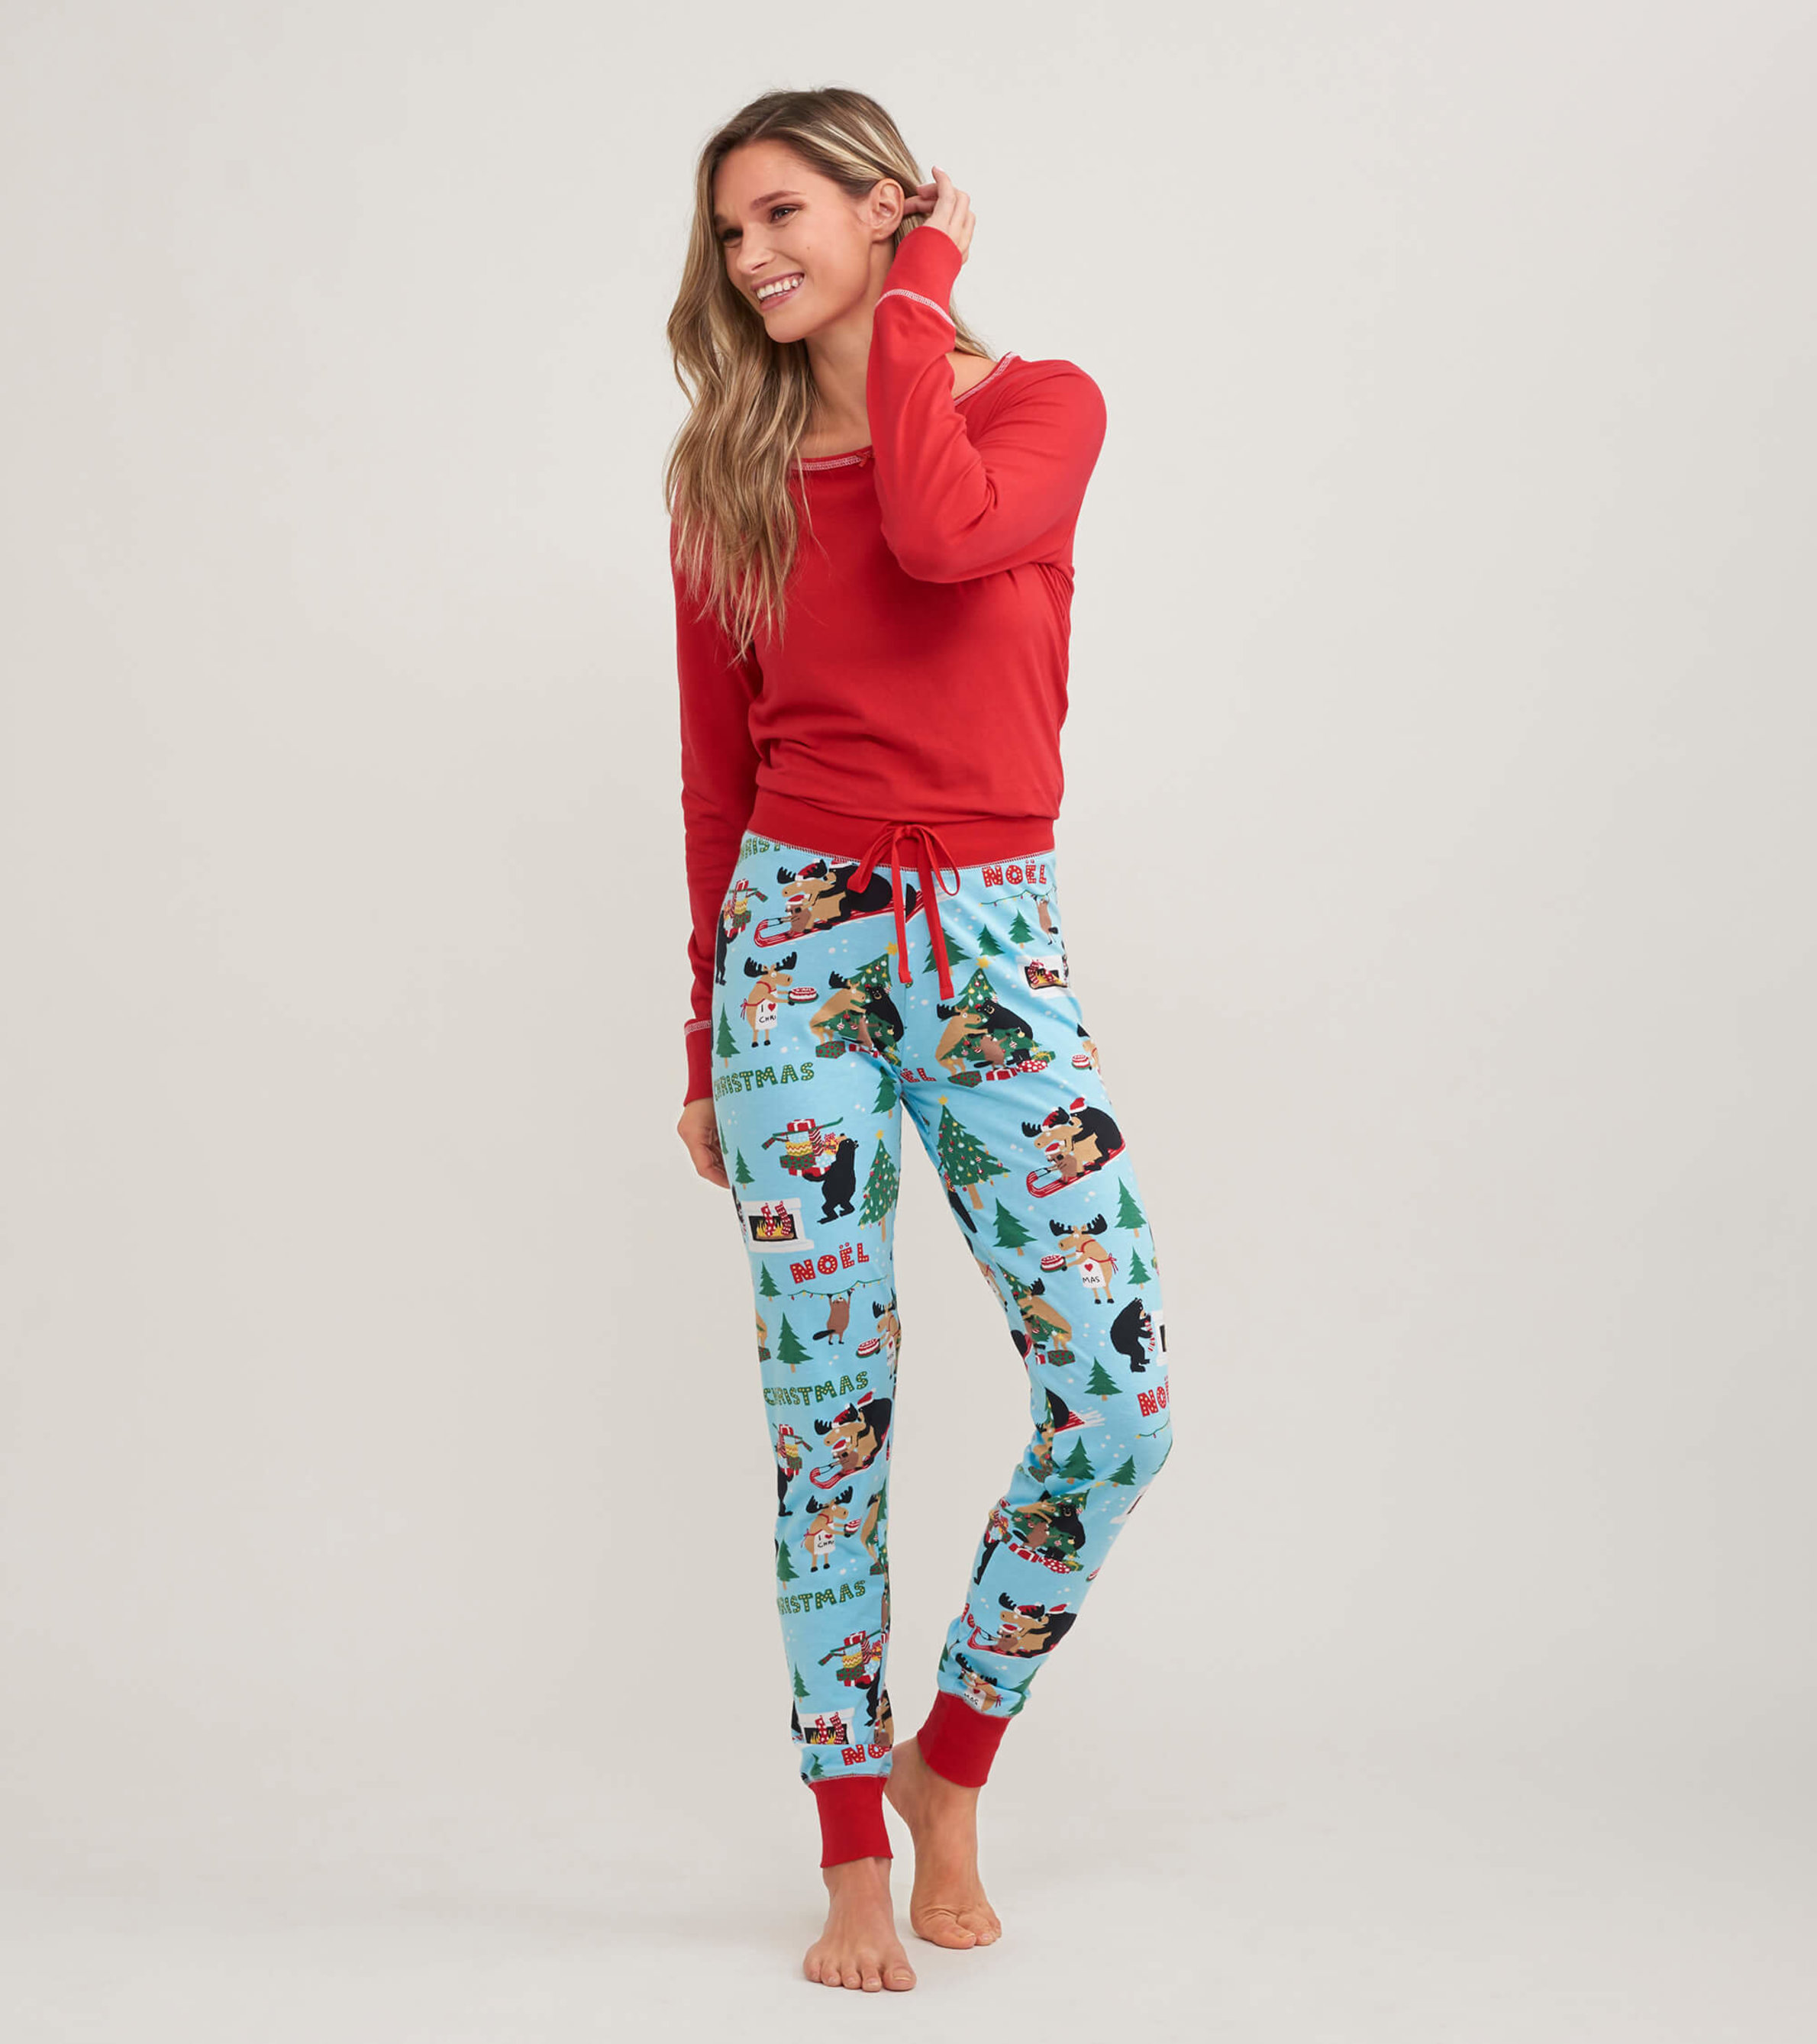 Wild About Christmas Women's Long Sleeve Tee and Leggings Pajama